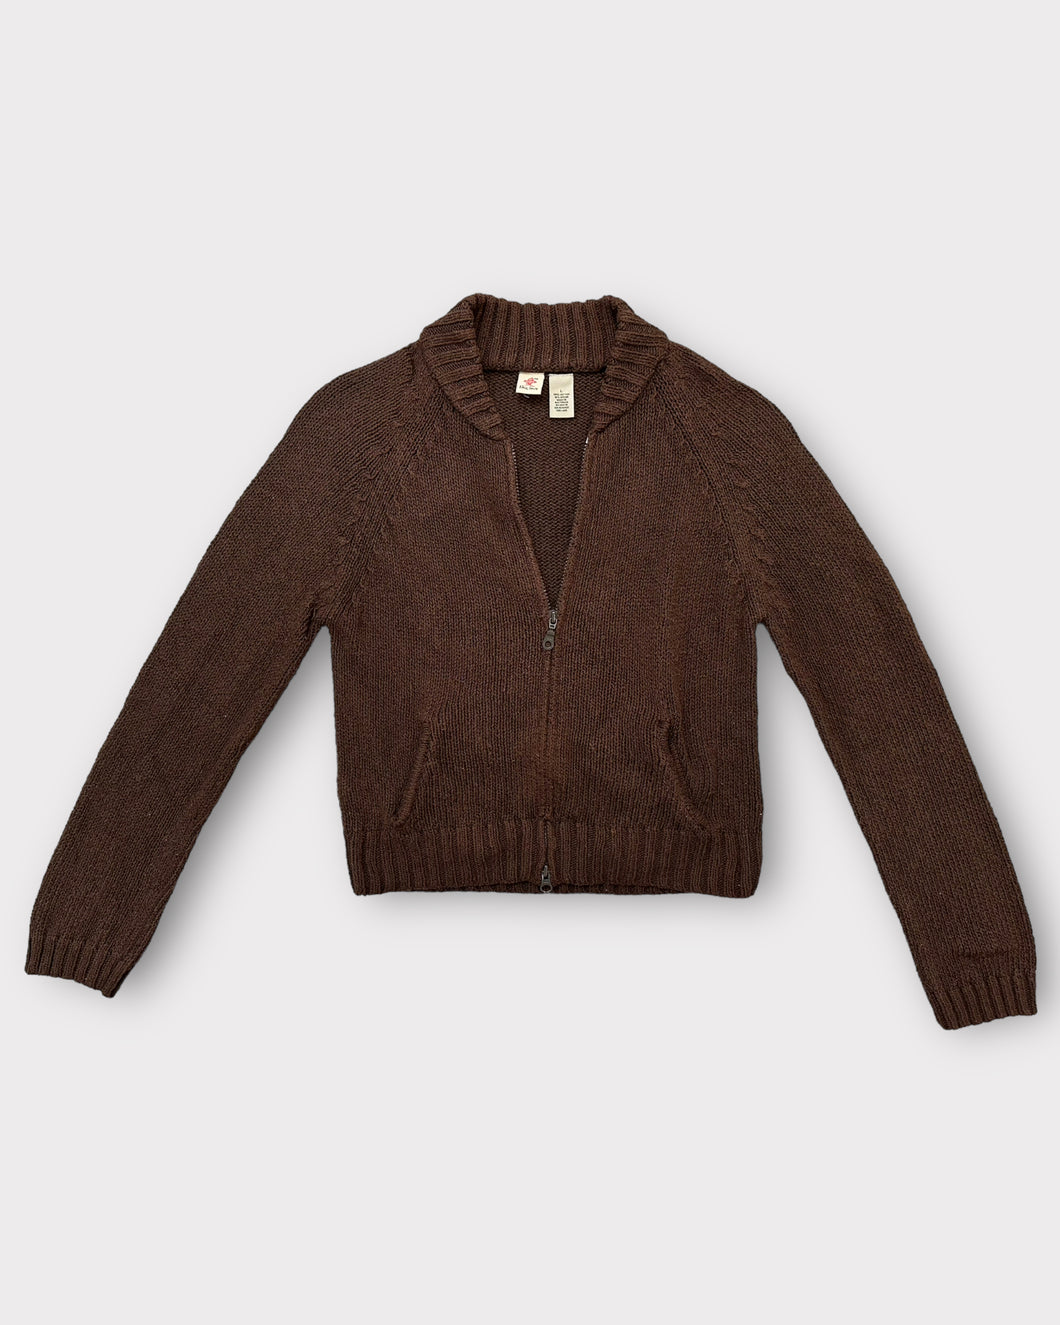 Like, Love Brown Sweater Zip Up Jacket (L)